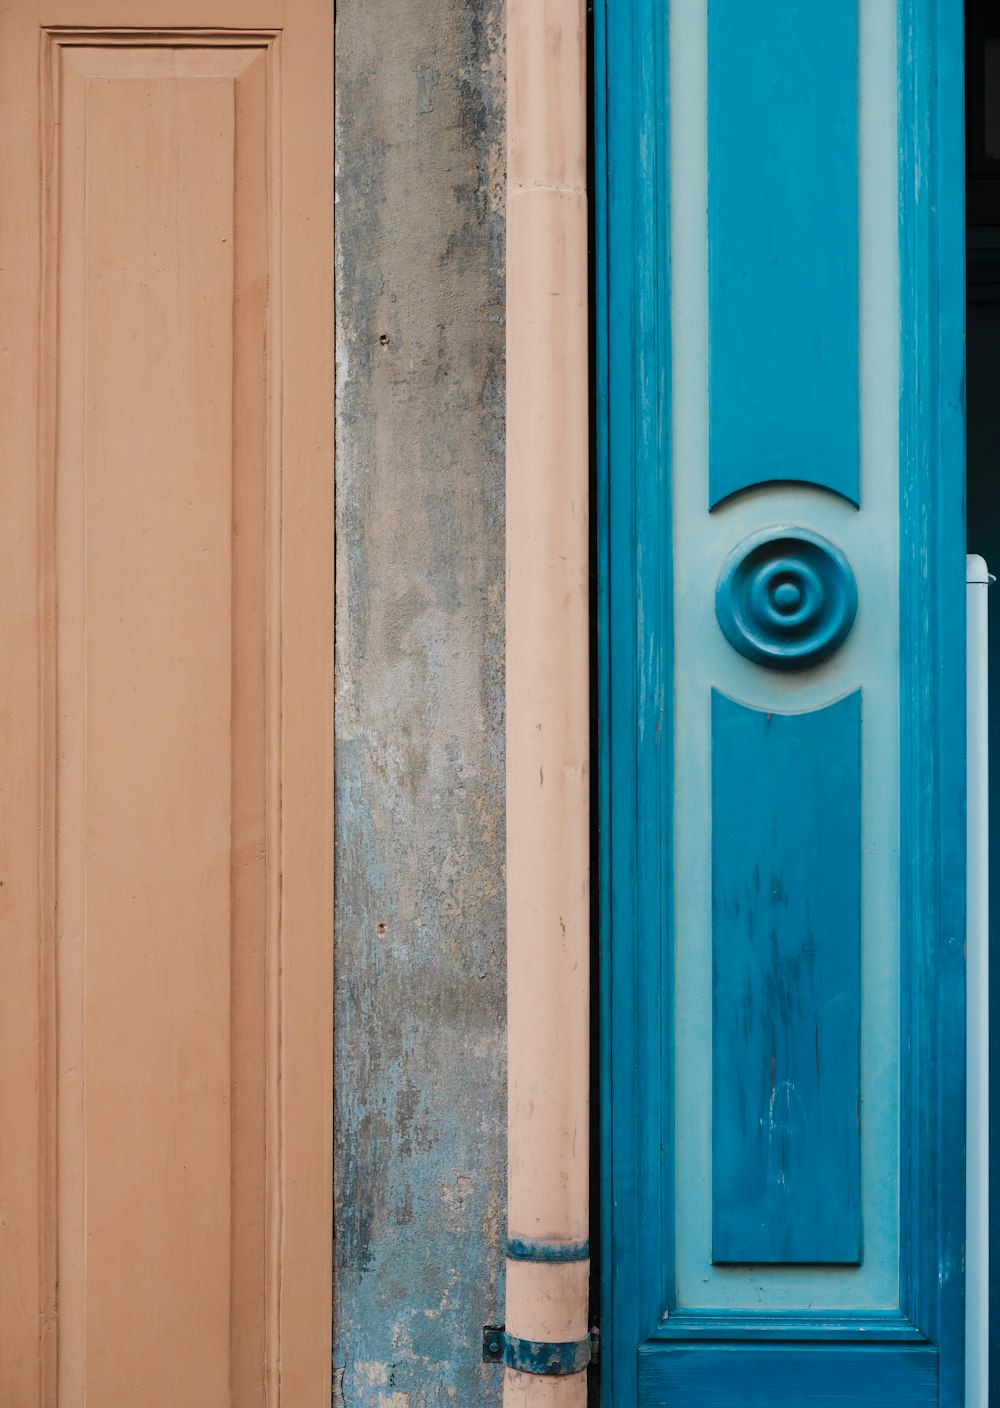 a blue door and a brown door with a blue handle